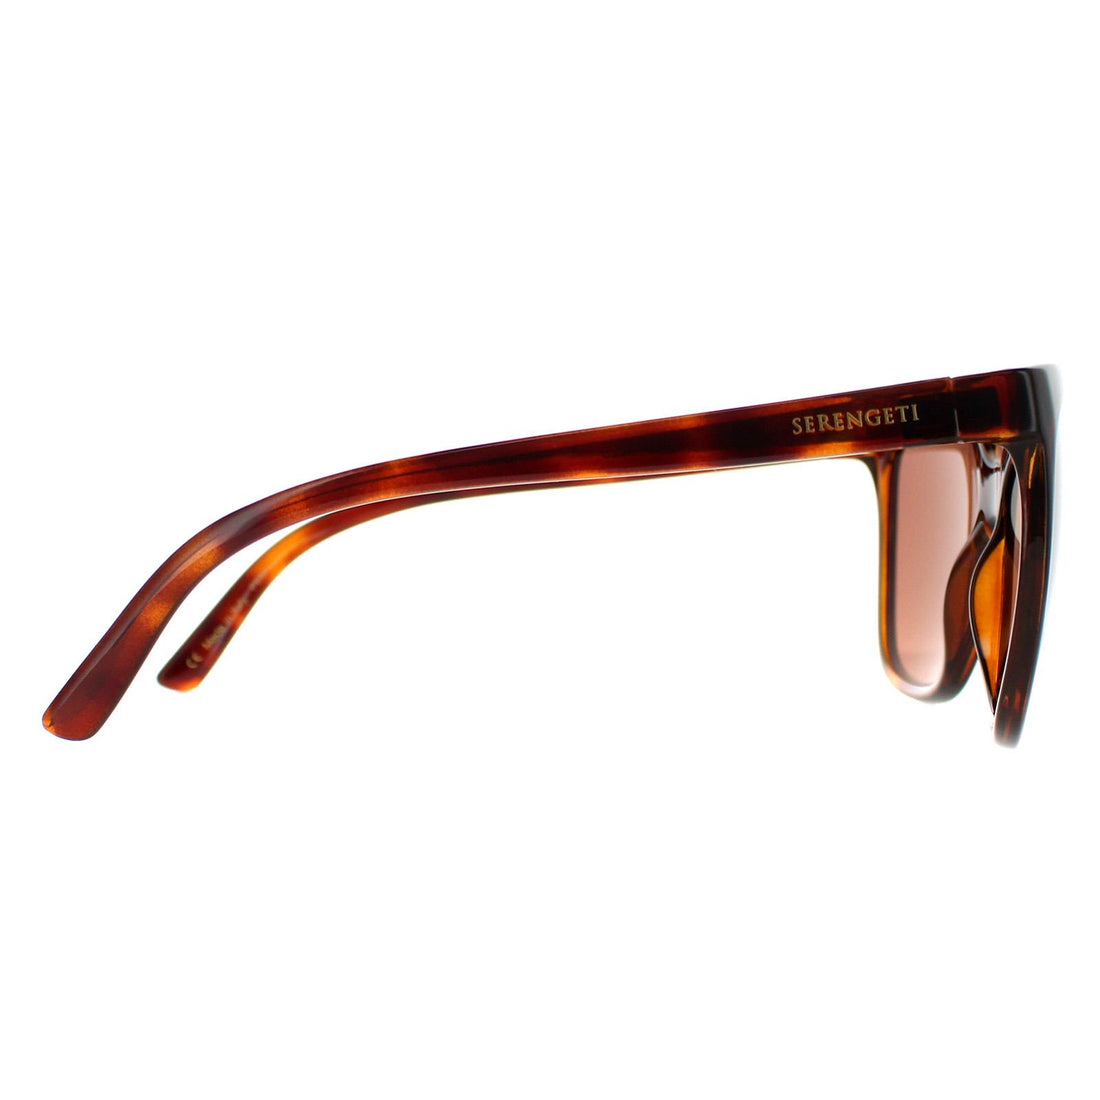 Serengeti Sunglasses Agata 8994 Shiny Tortoise Mineral Polarized Drivers Brown